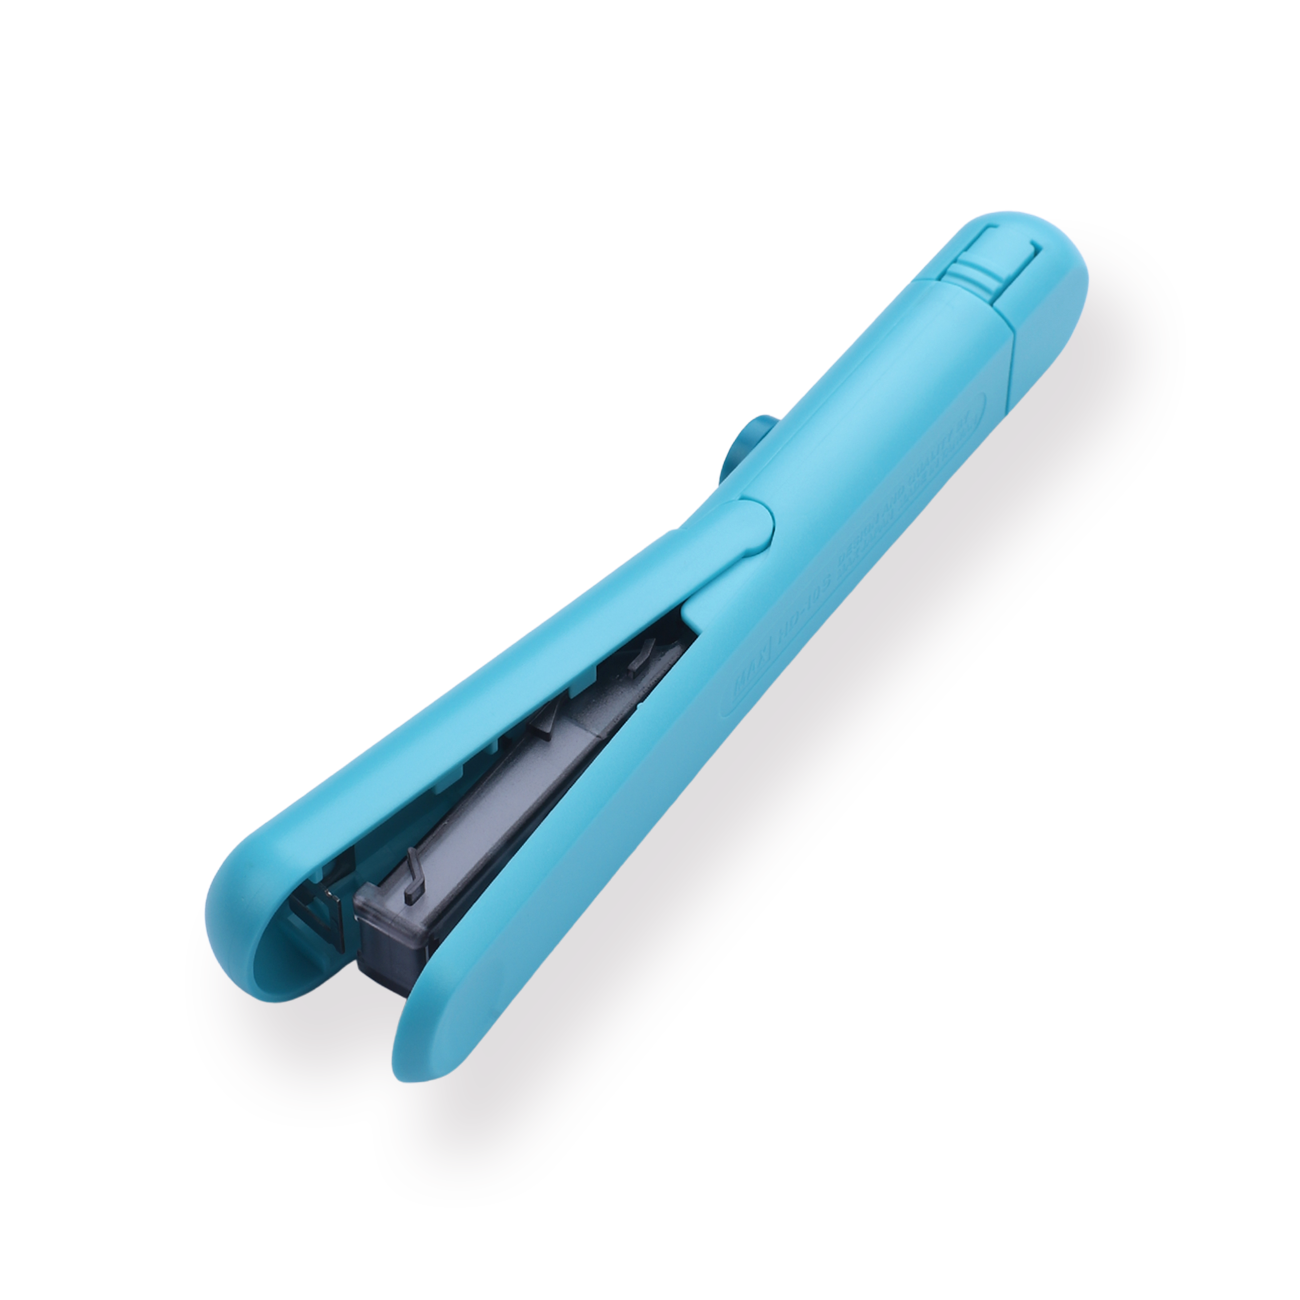 Max Motick Mobile Stick Stapler - Blue - Stationery Pal